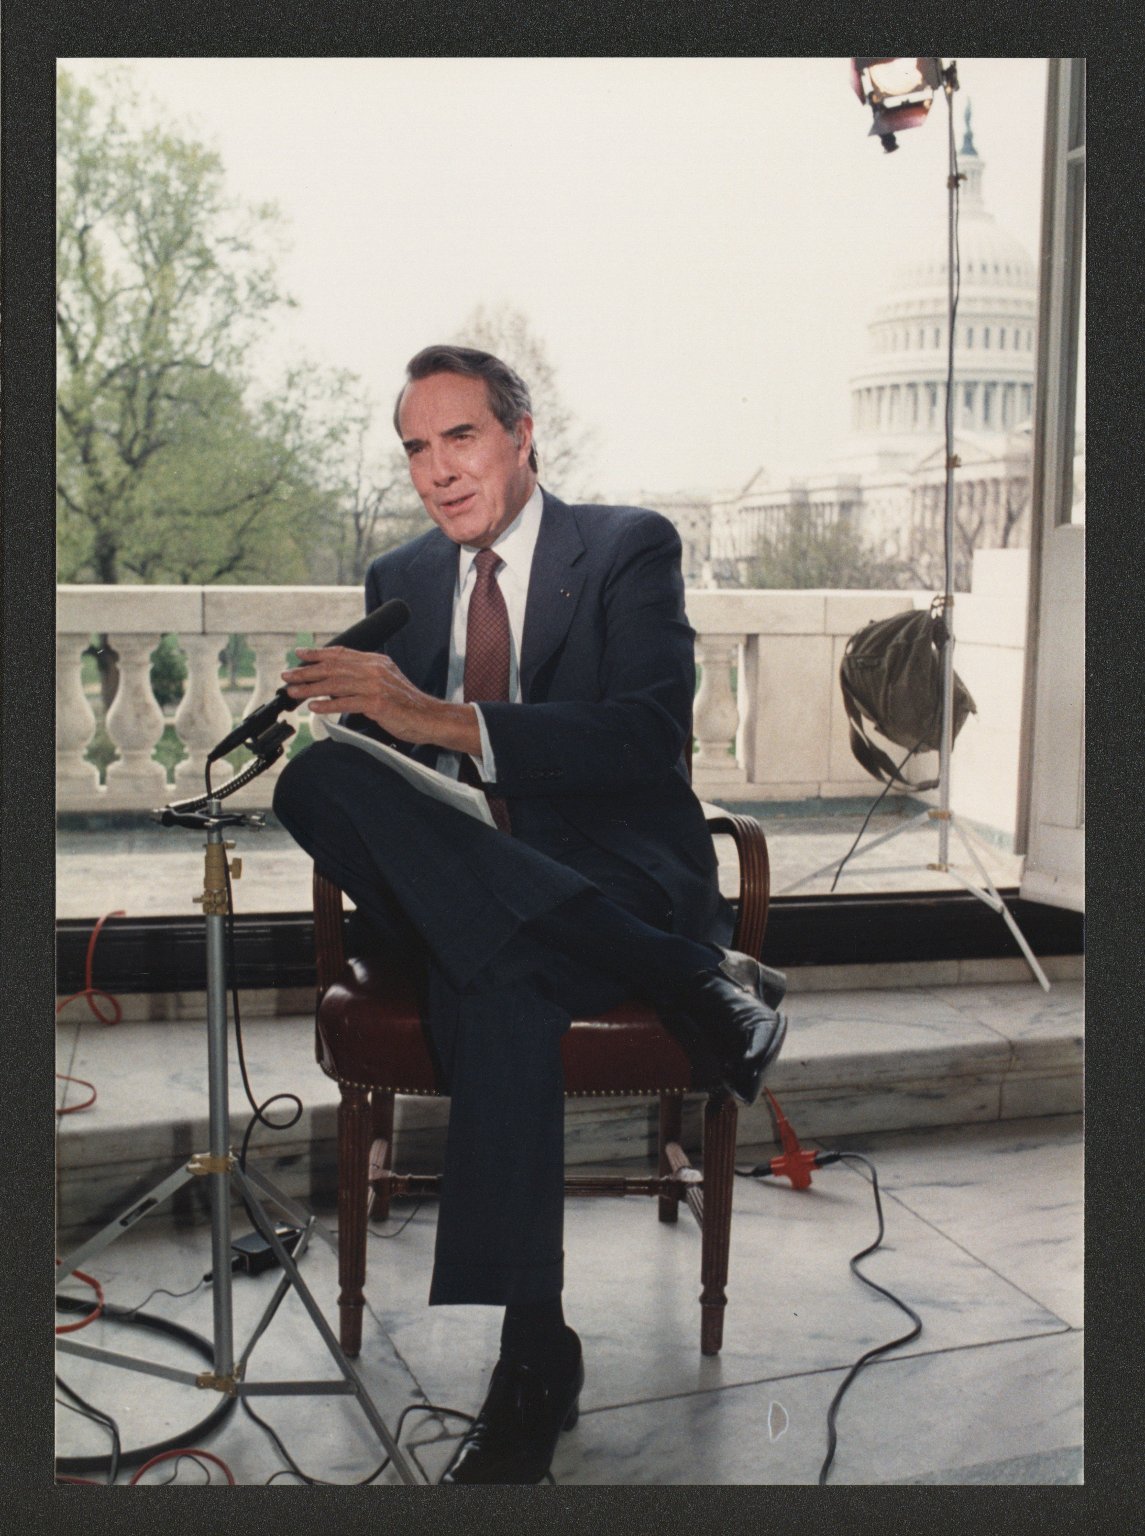 Senator Bob Dole being interviewed on balcony of U.S. Capitol, c. 1988